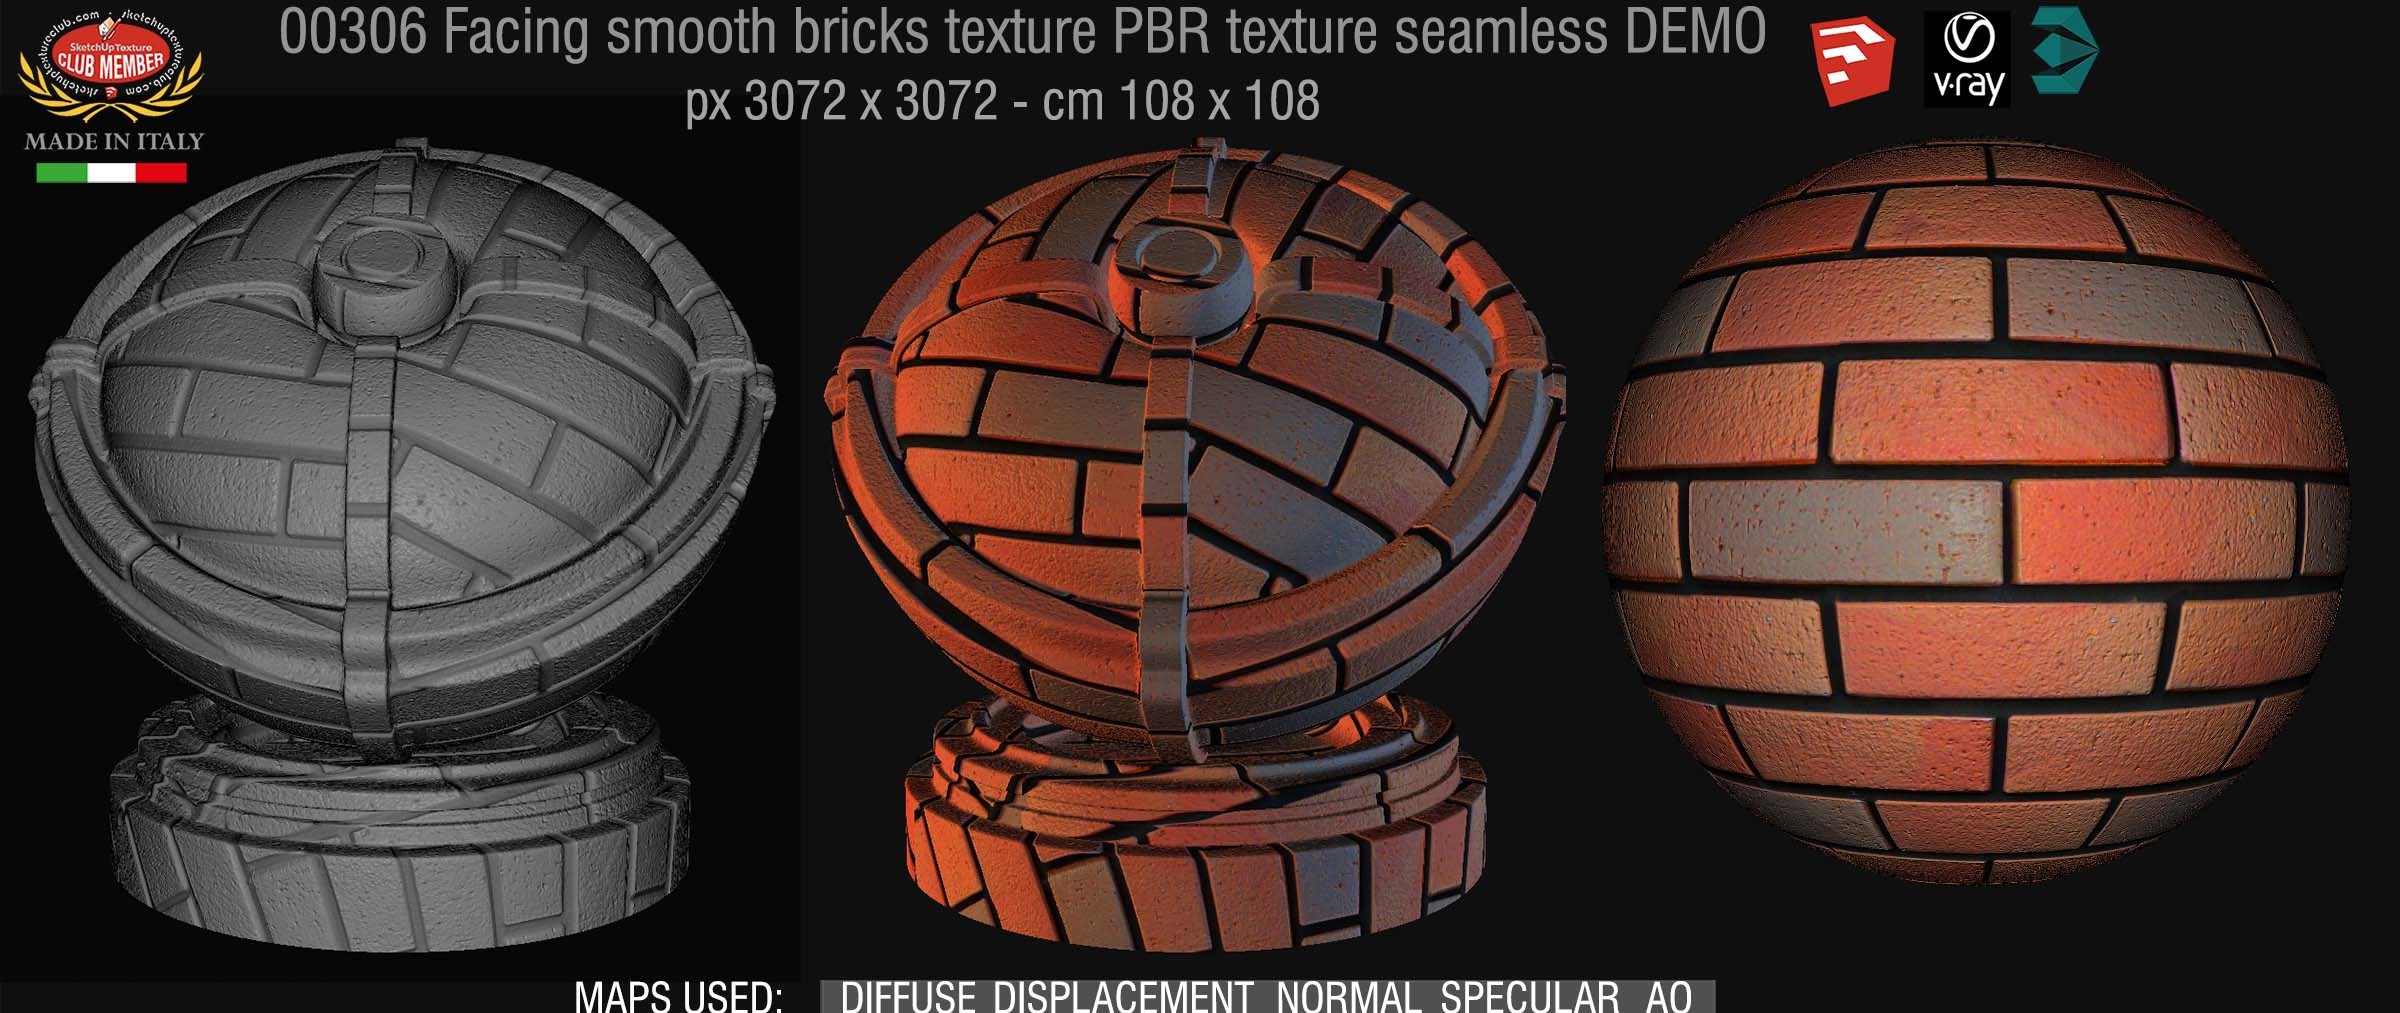 00306 Facing smooth bricks PBR texture seamless DEMO